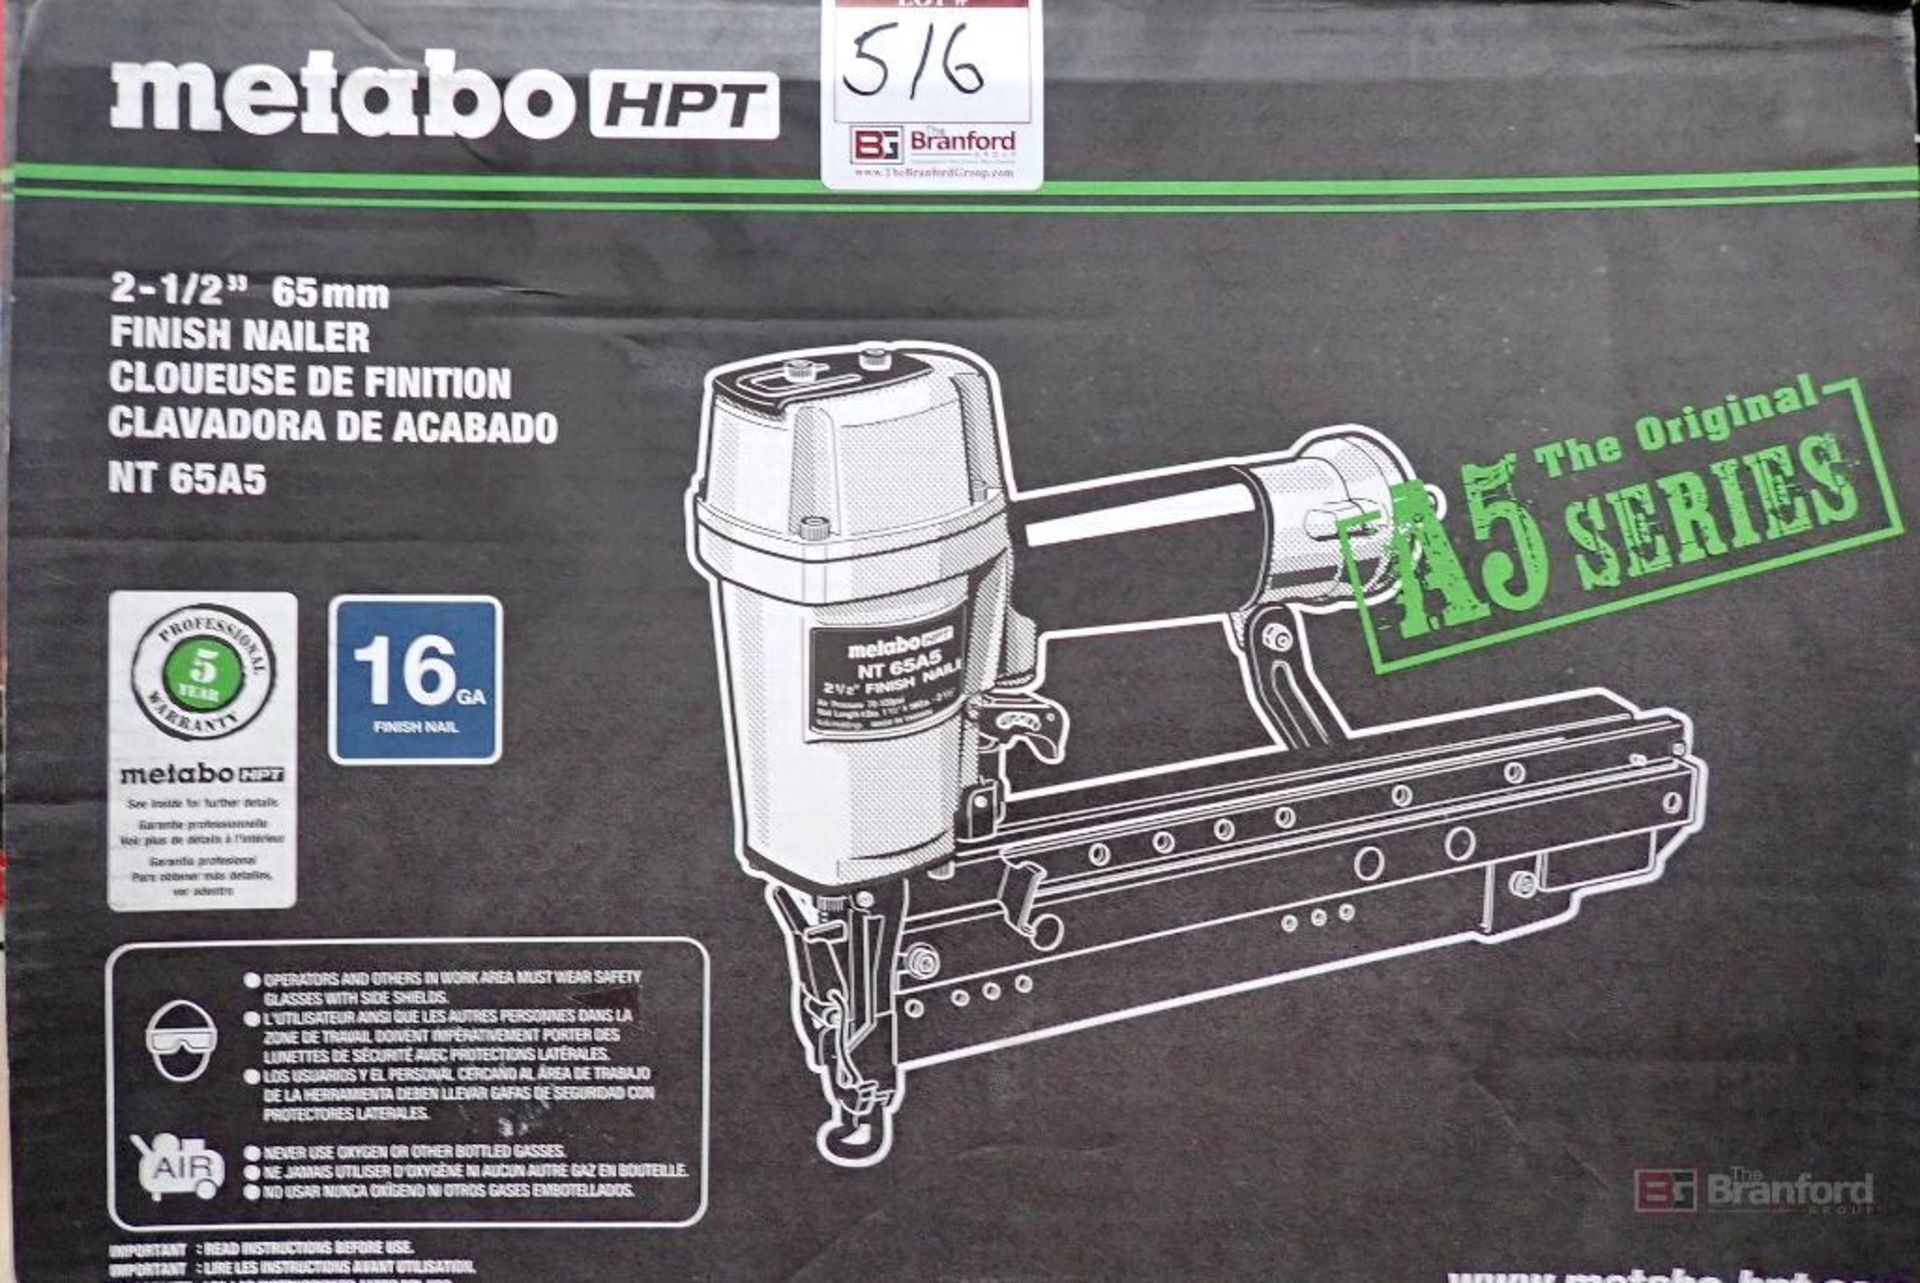 Metabo HPT NT65A5 2-1/2" 65mm Finish Nailer